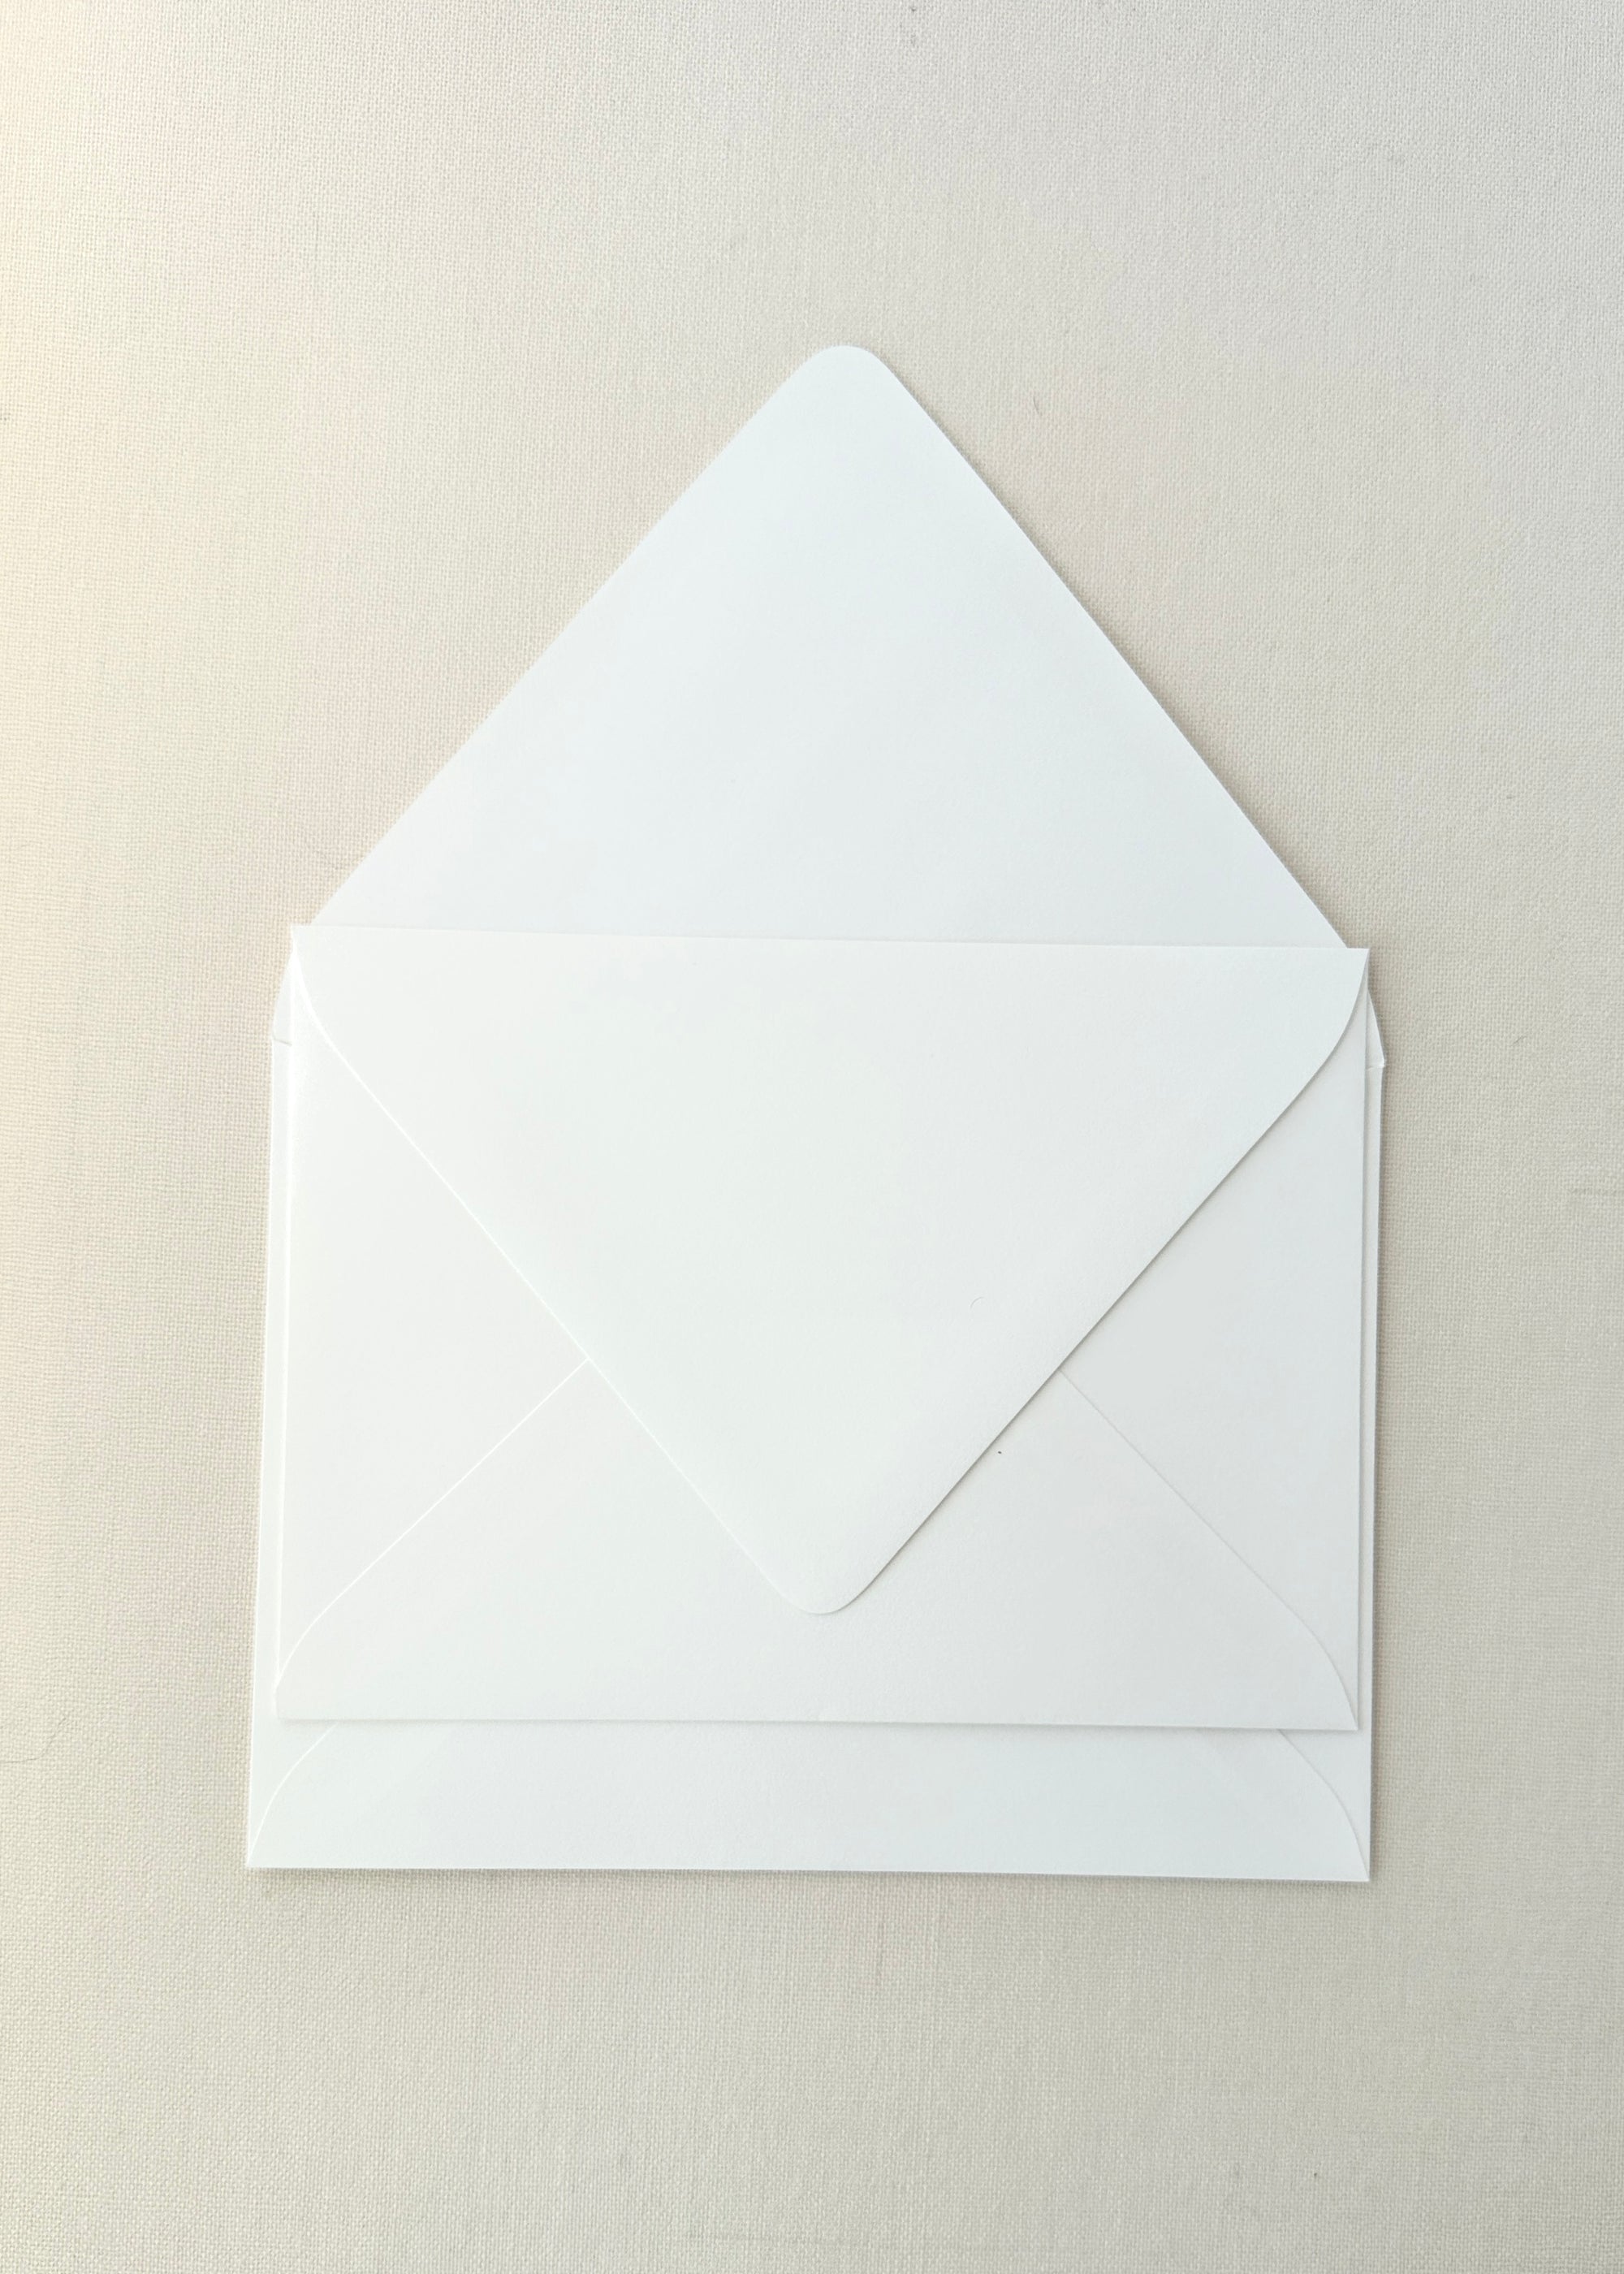 Double Envelopes (Inner & Outer Mailing Envelopes)